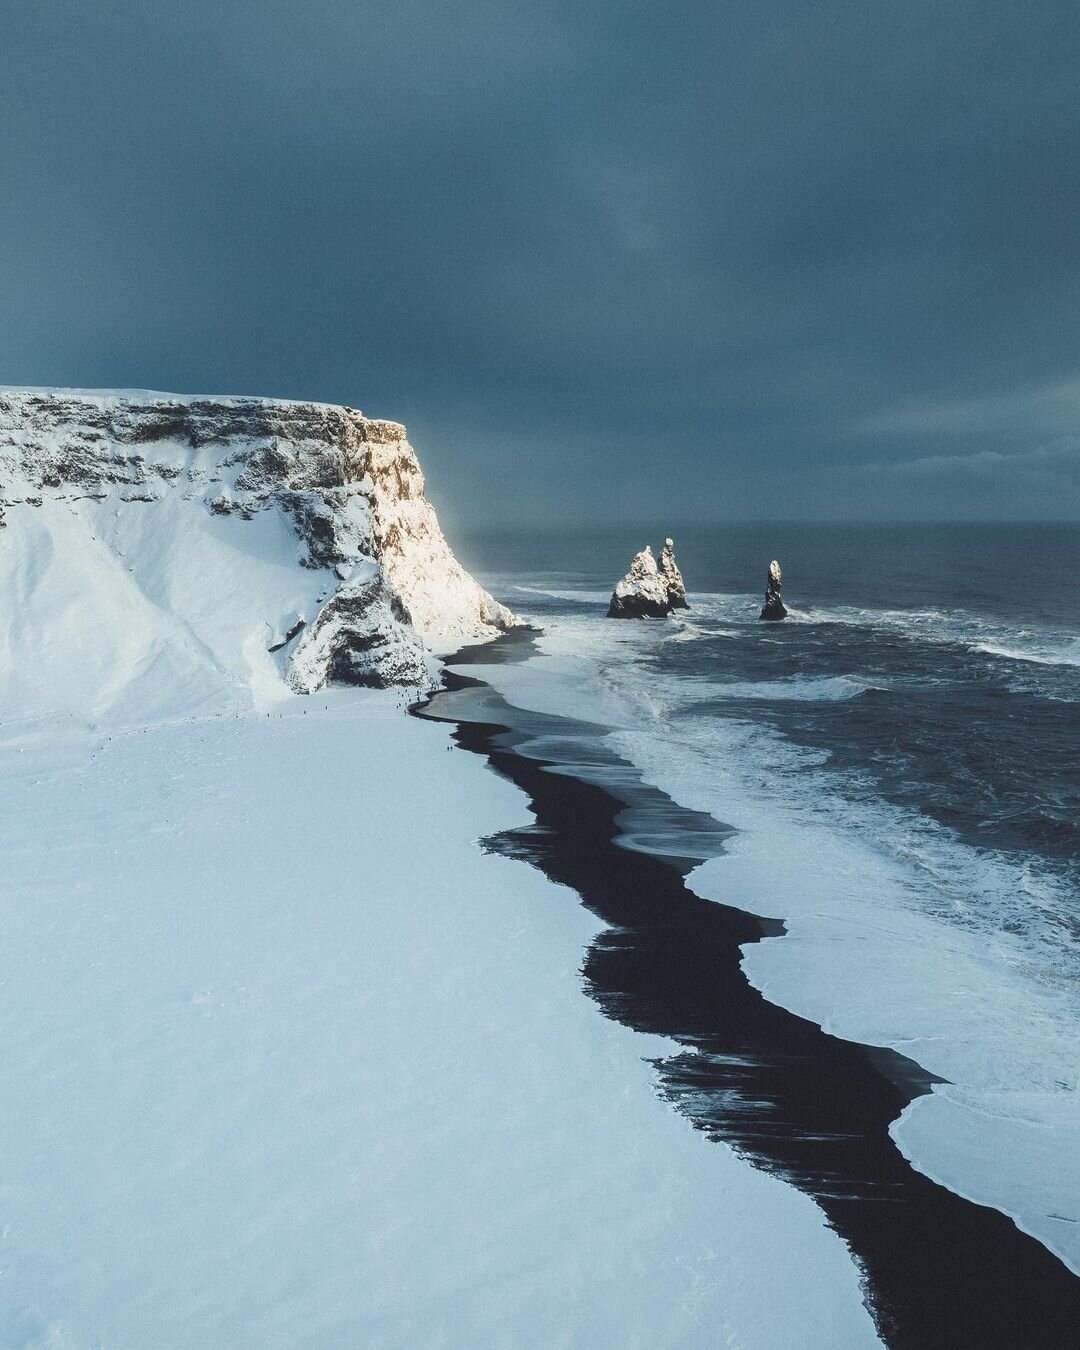 Black beach of Iceland | by @asasteinars⁠
&ndash; #staffpick #droneheroes